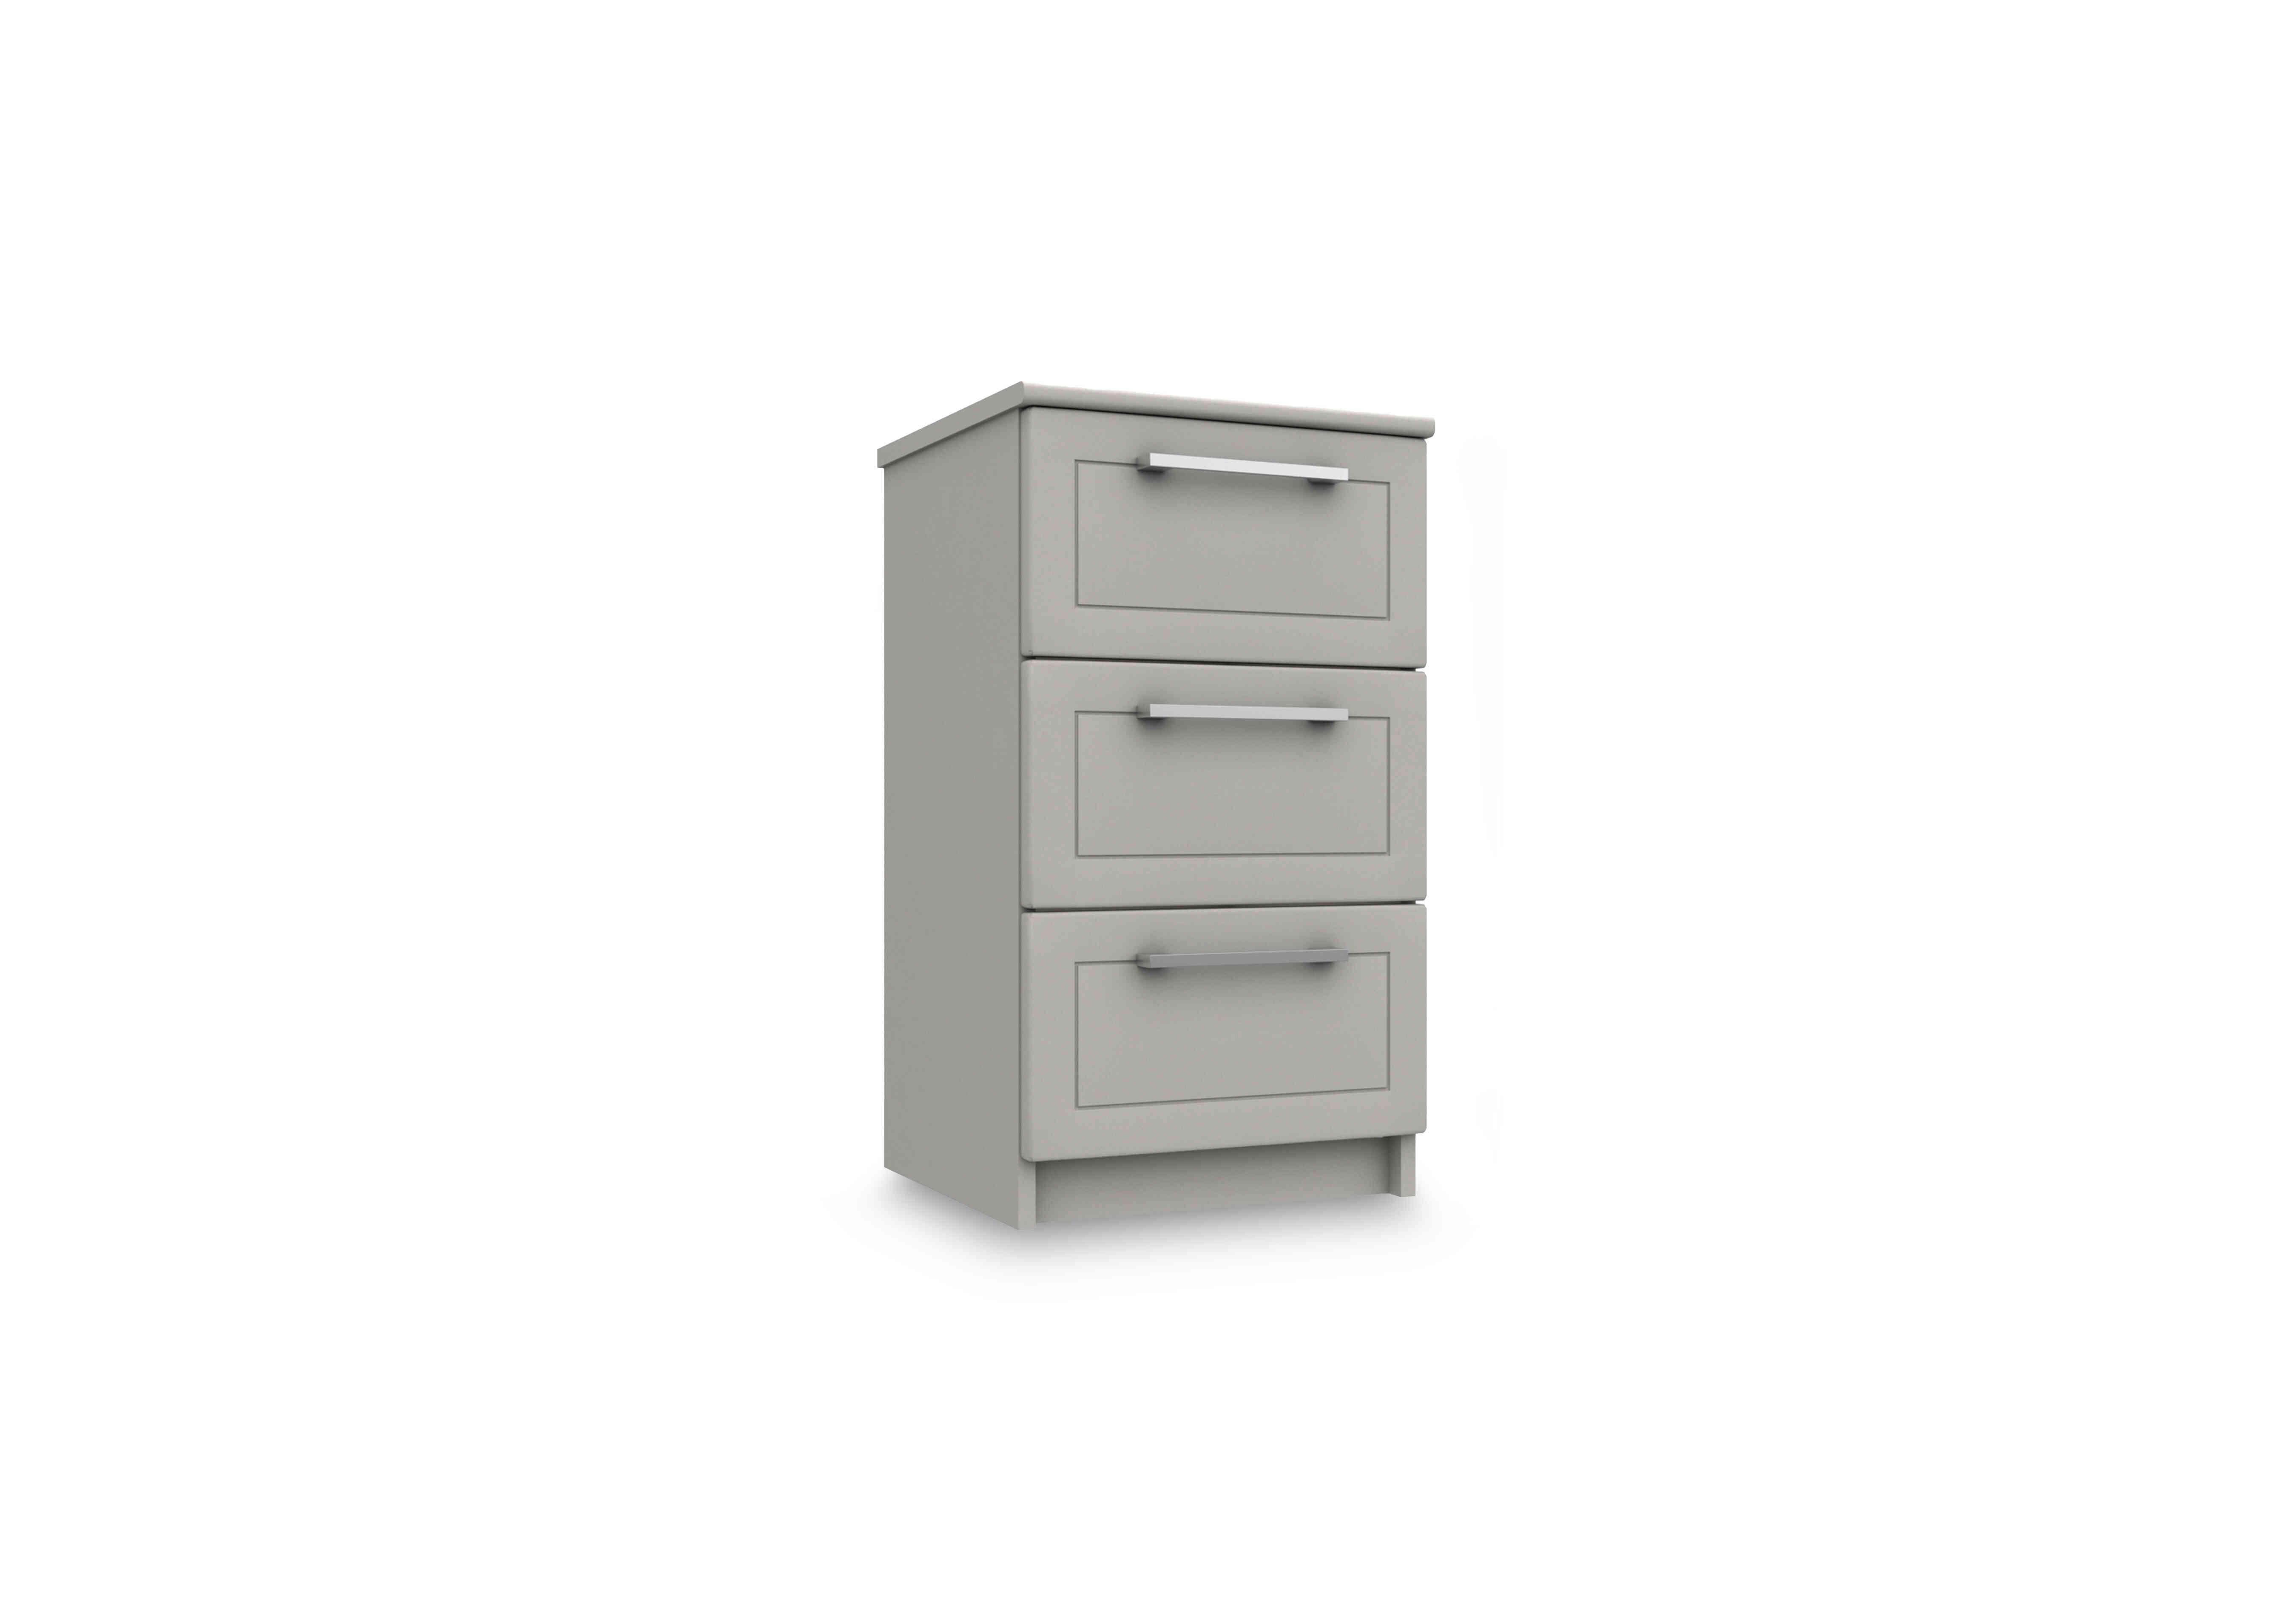 Bexley 3 Drawer Bedside Cabinet in Light Grey Gloss on Furniture Village